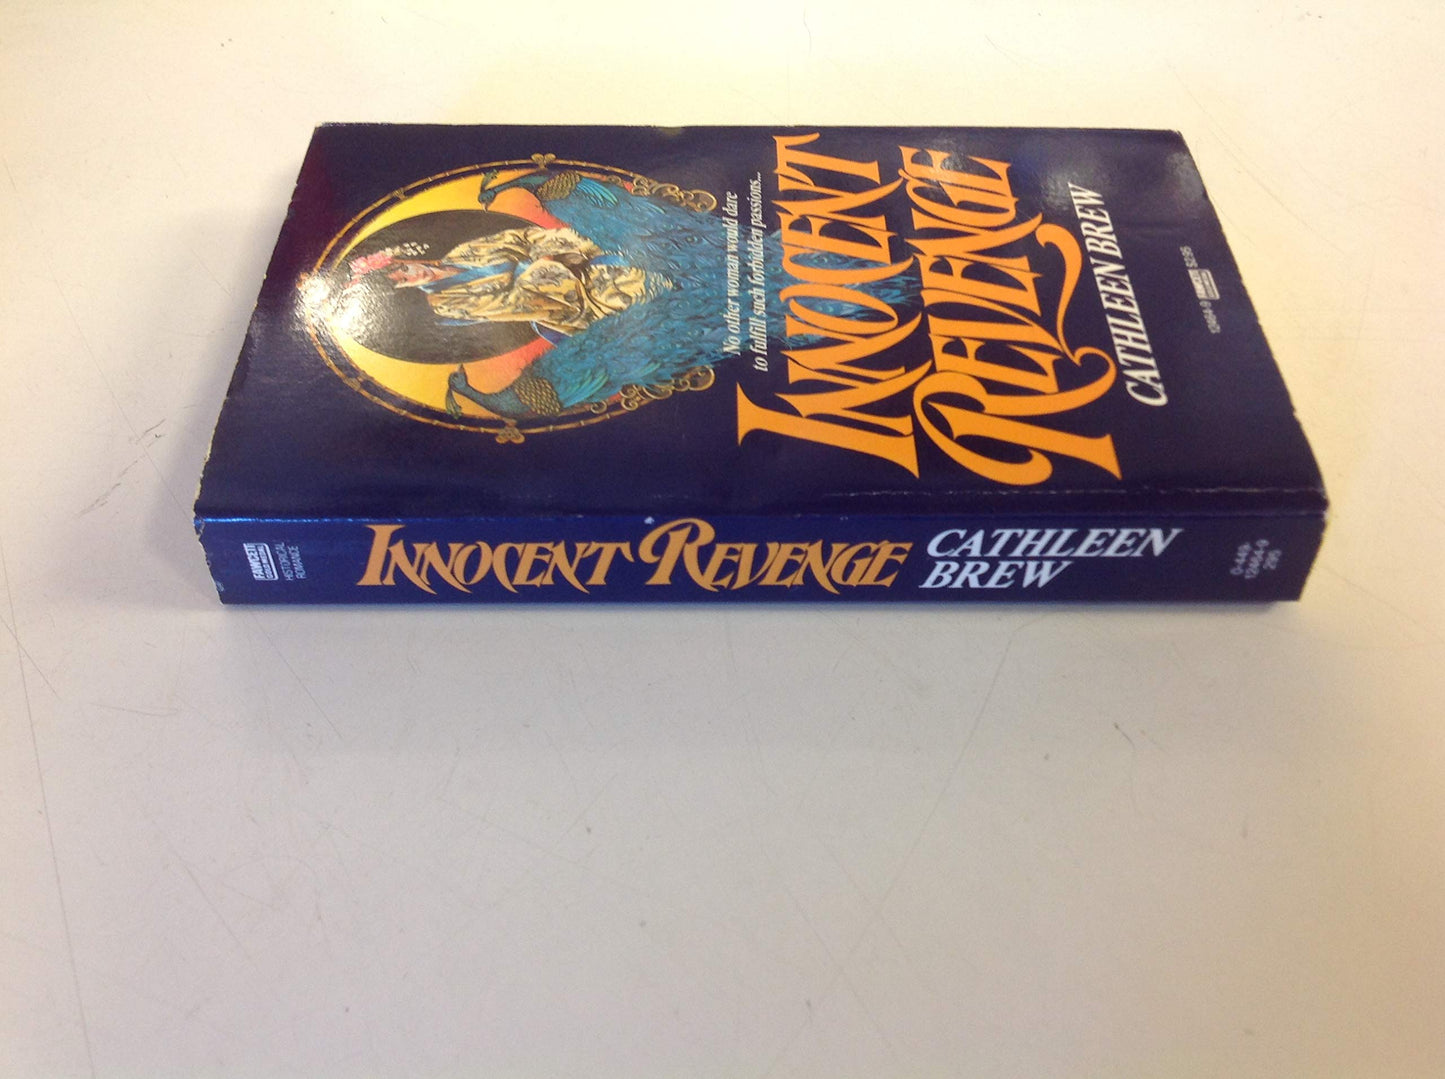 Vintage 1983 Mass Market Paperback Innocent Revenge Cathleen Brew Ballantine Books First Printing